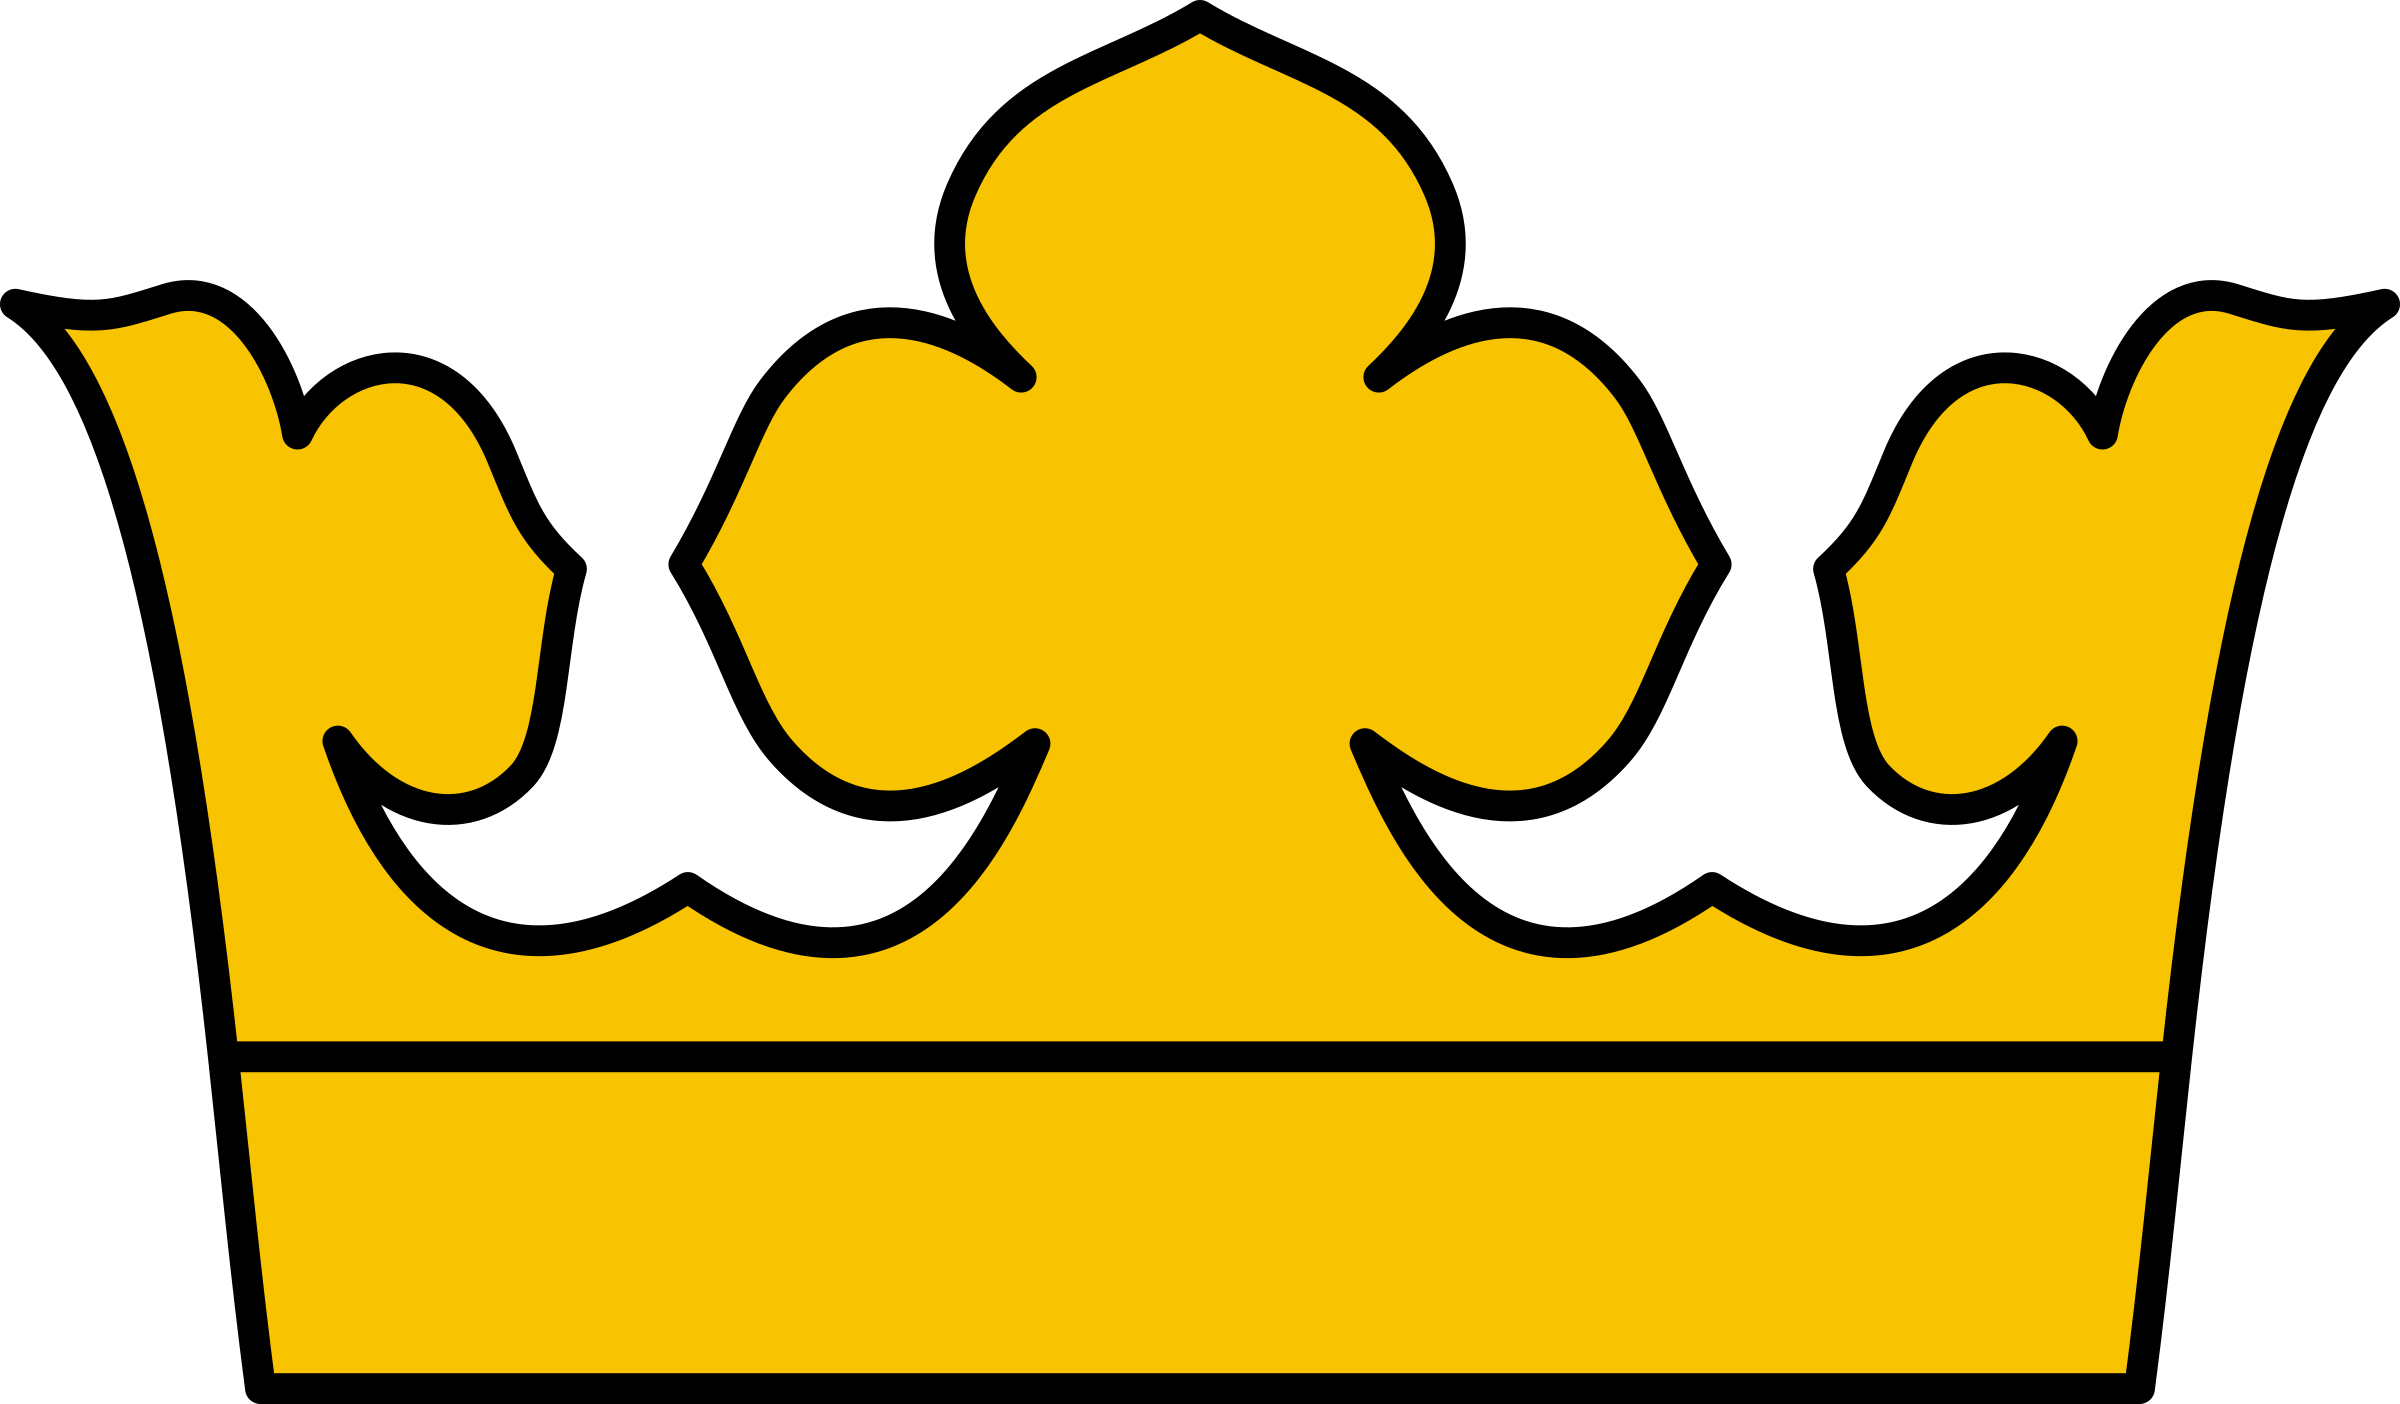 king-crown-template-printable-doctemplates